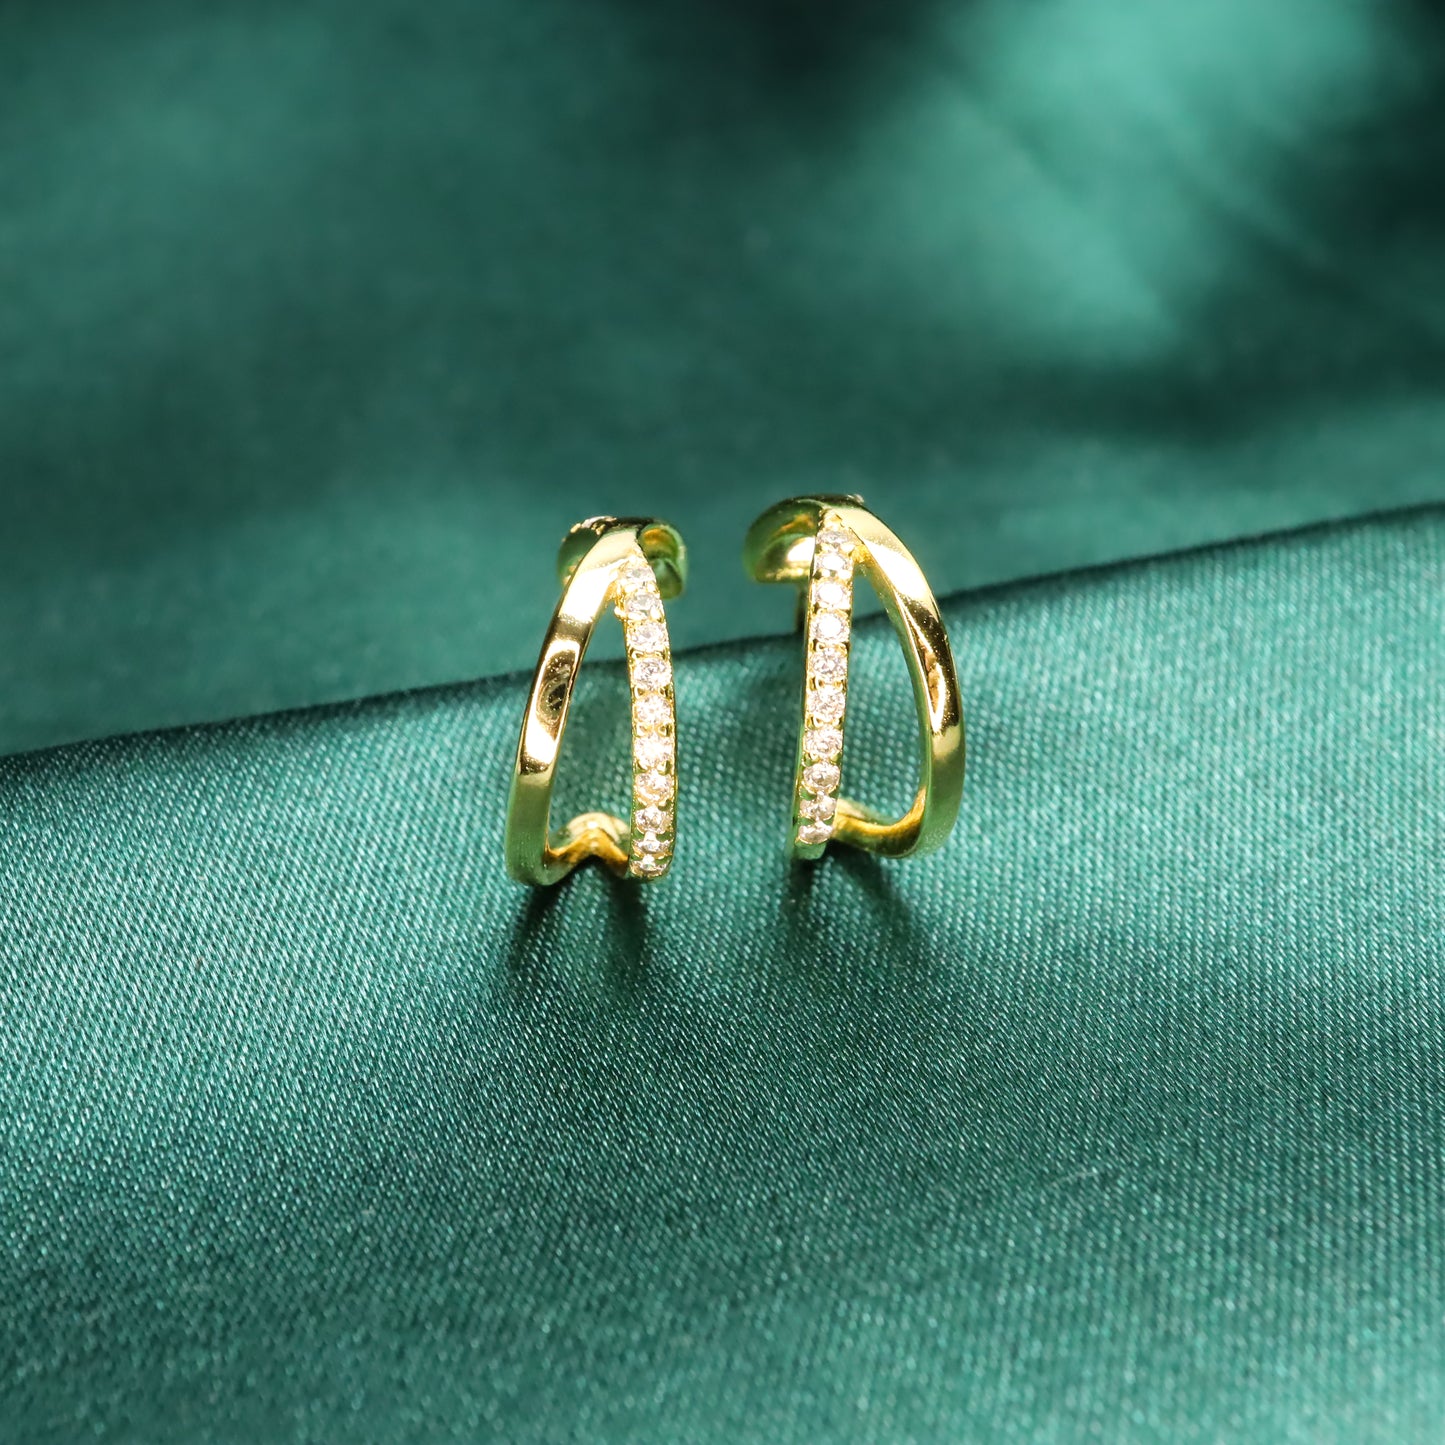 Twinkling Stary - S925 Sterling Silver & Zircon Stud Earrings (Color: Gold)